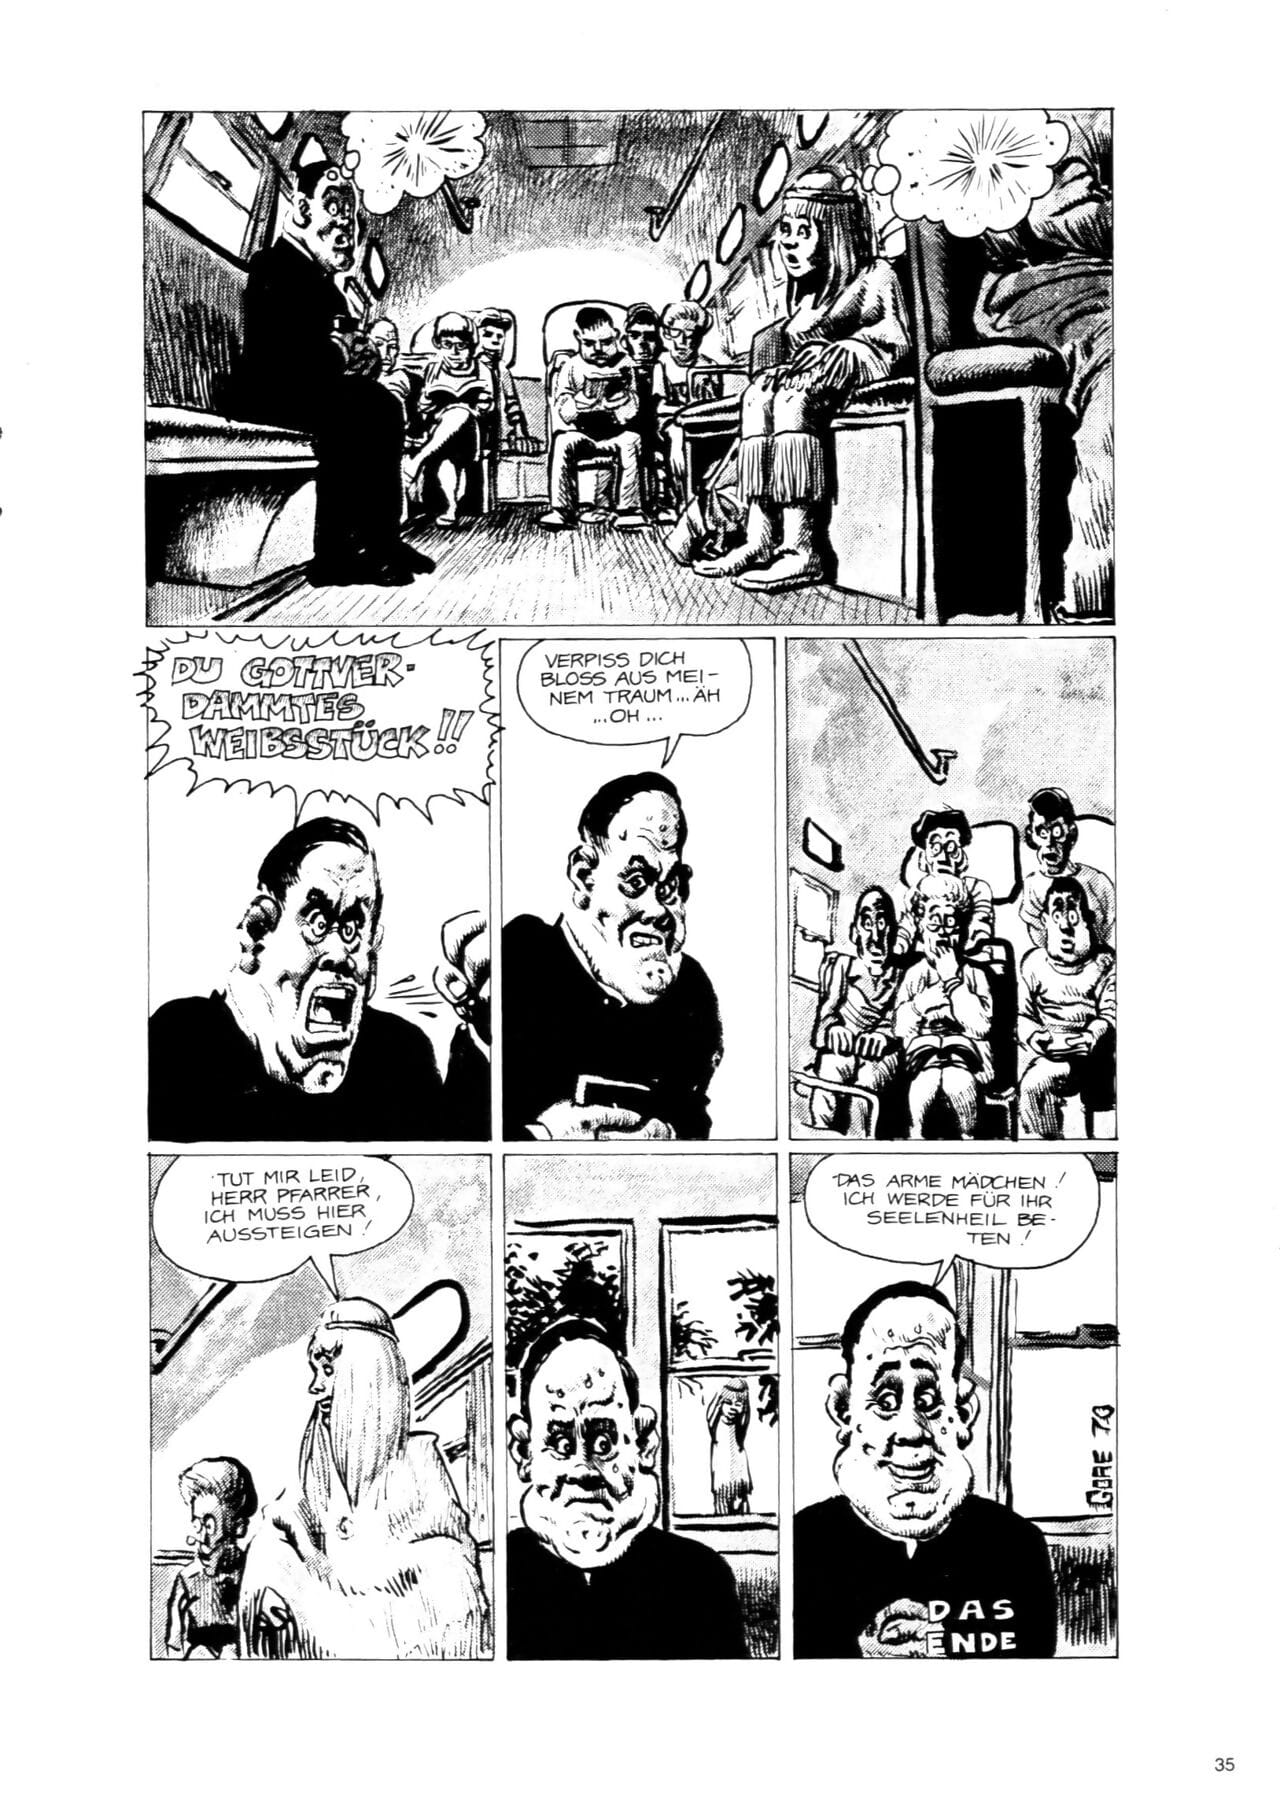 schwermetall #056 parte 2 page 1